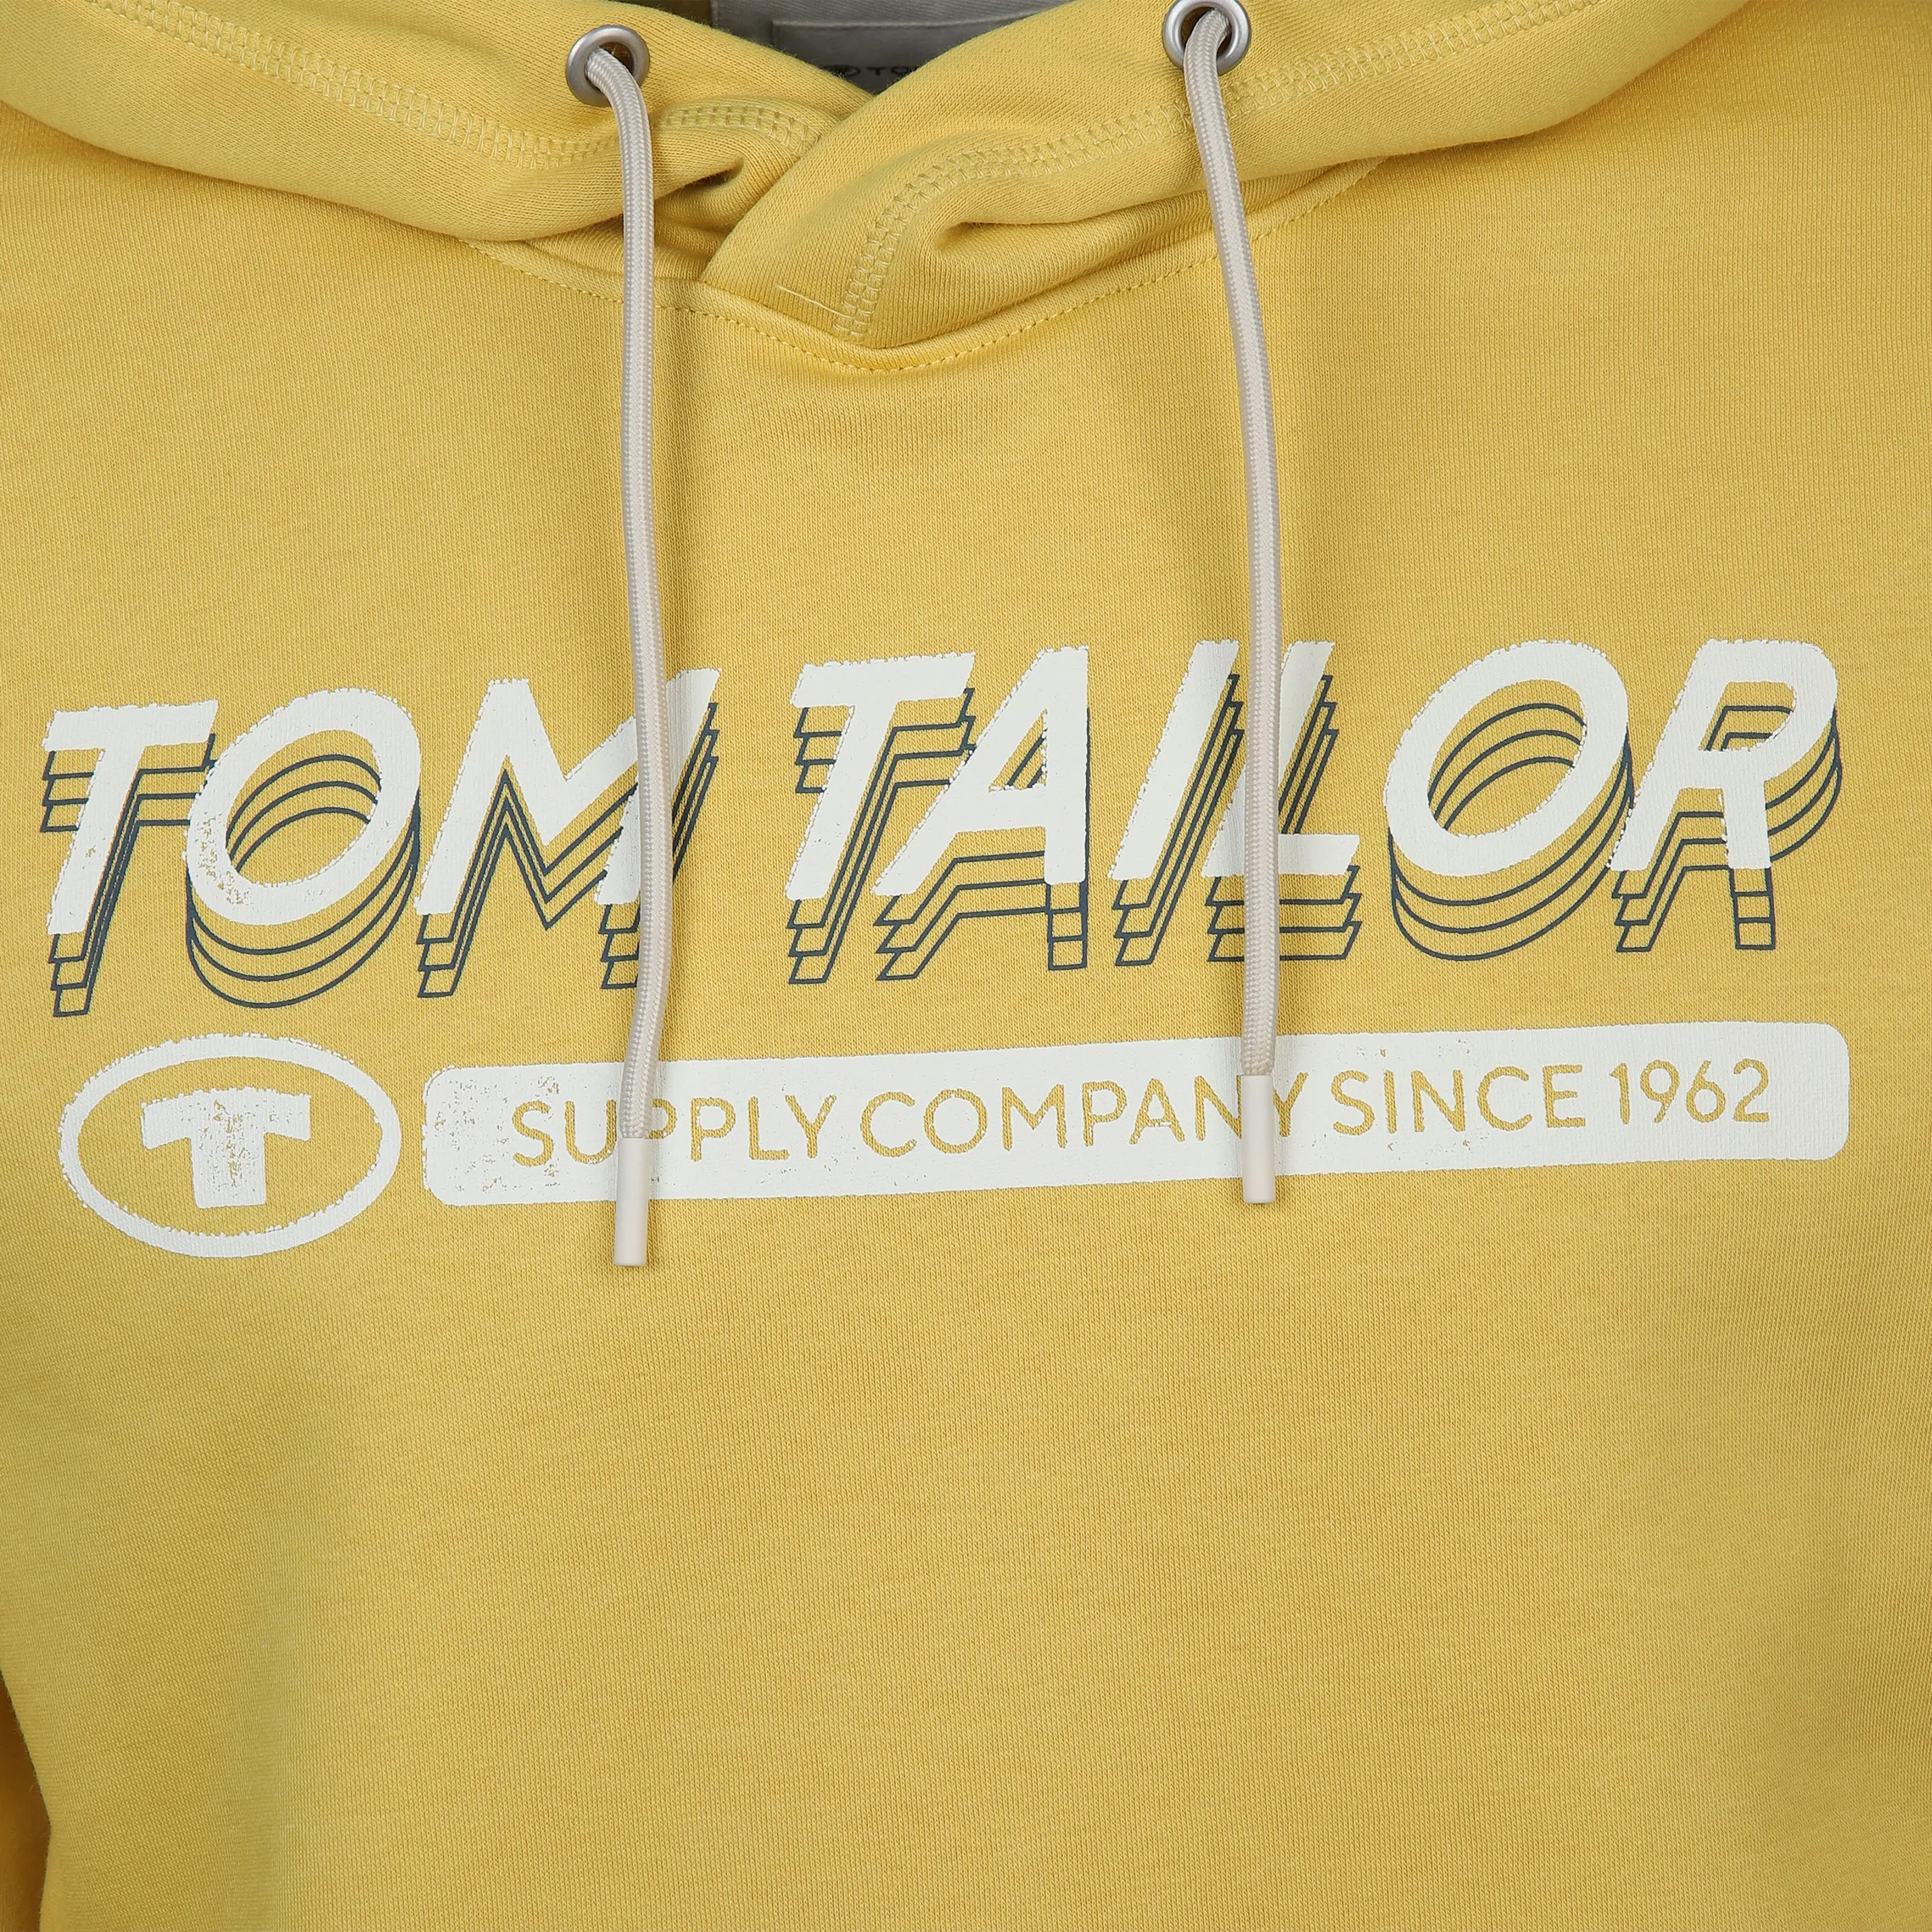 Tom Tailor 1039649 logo hood Gelb 887466 11657 3